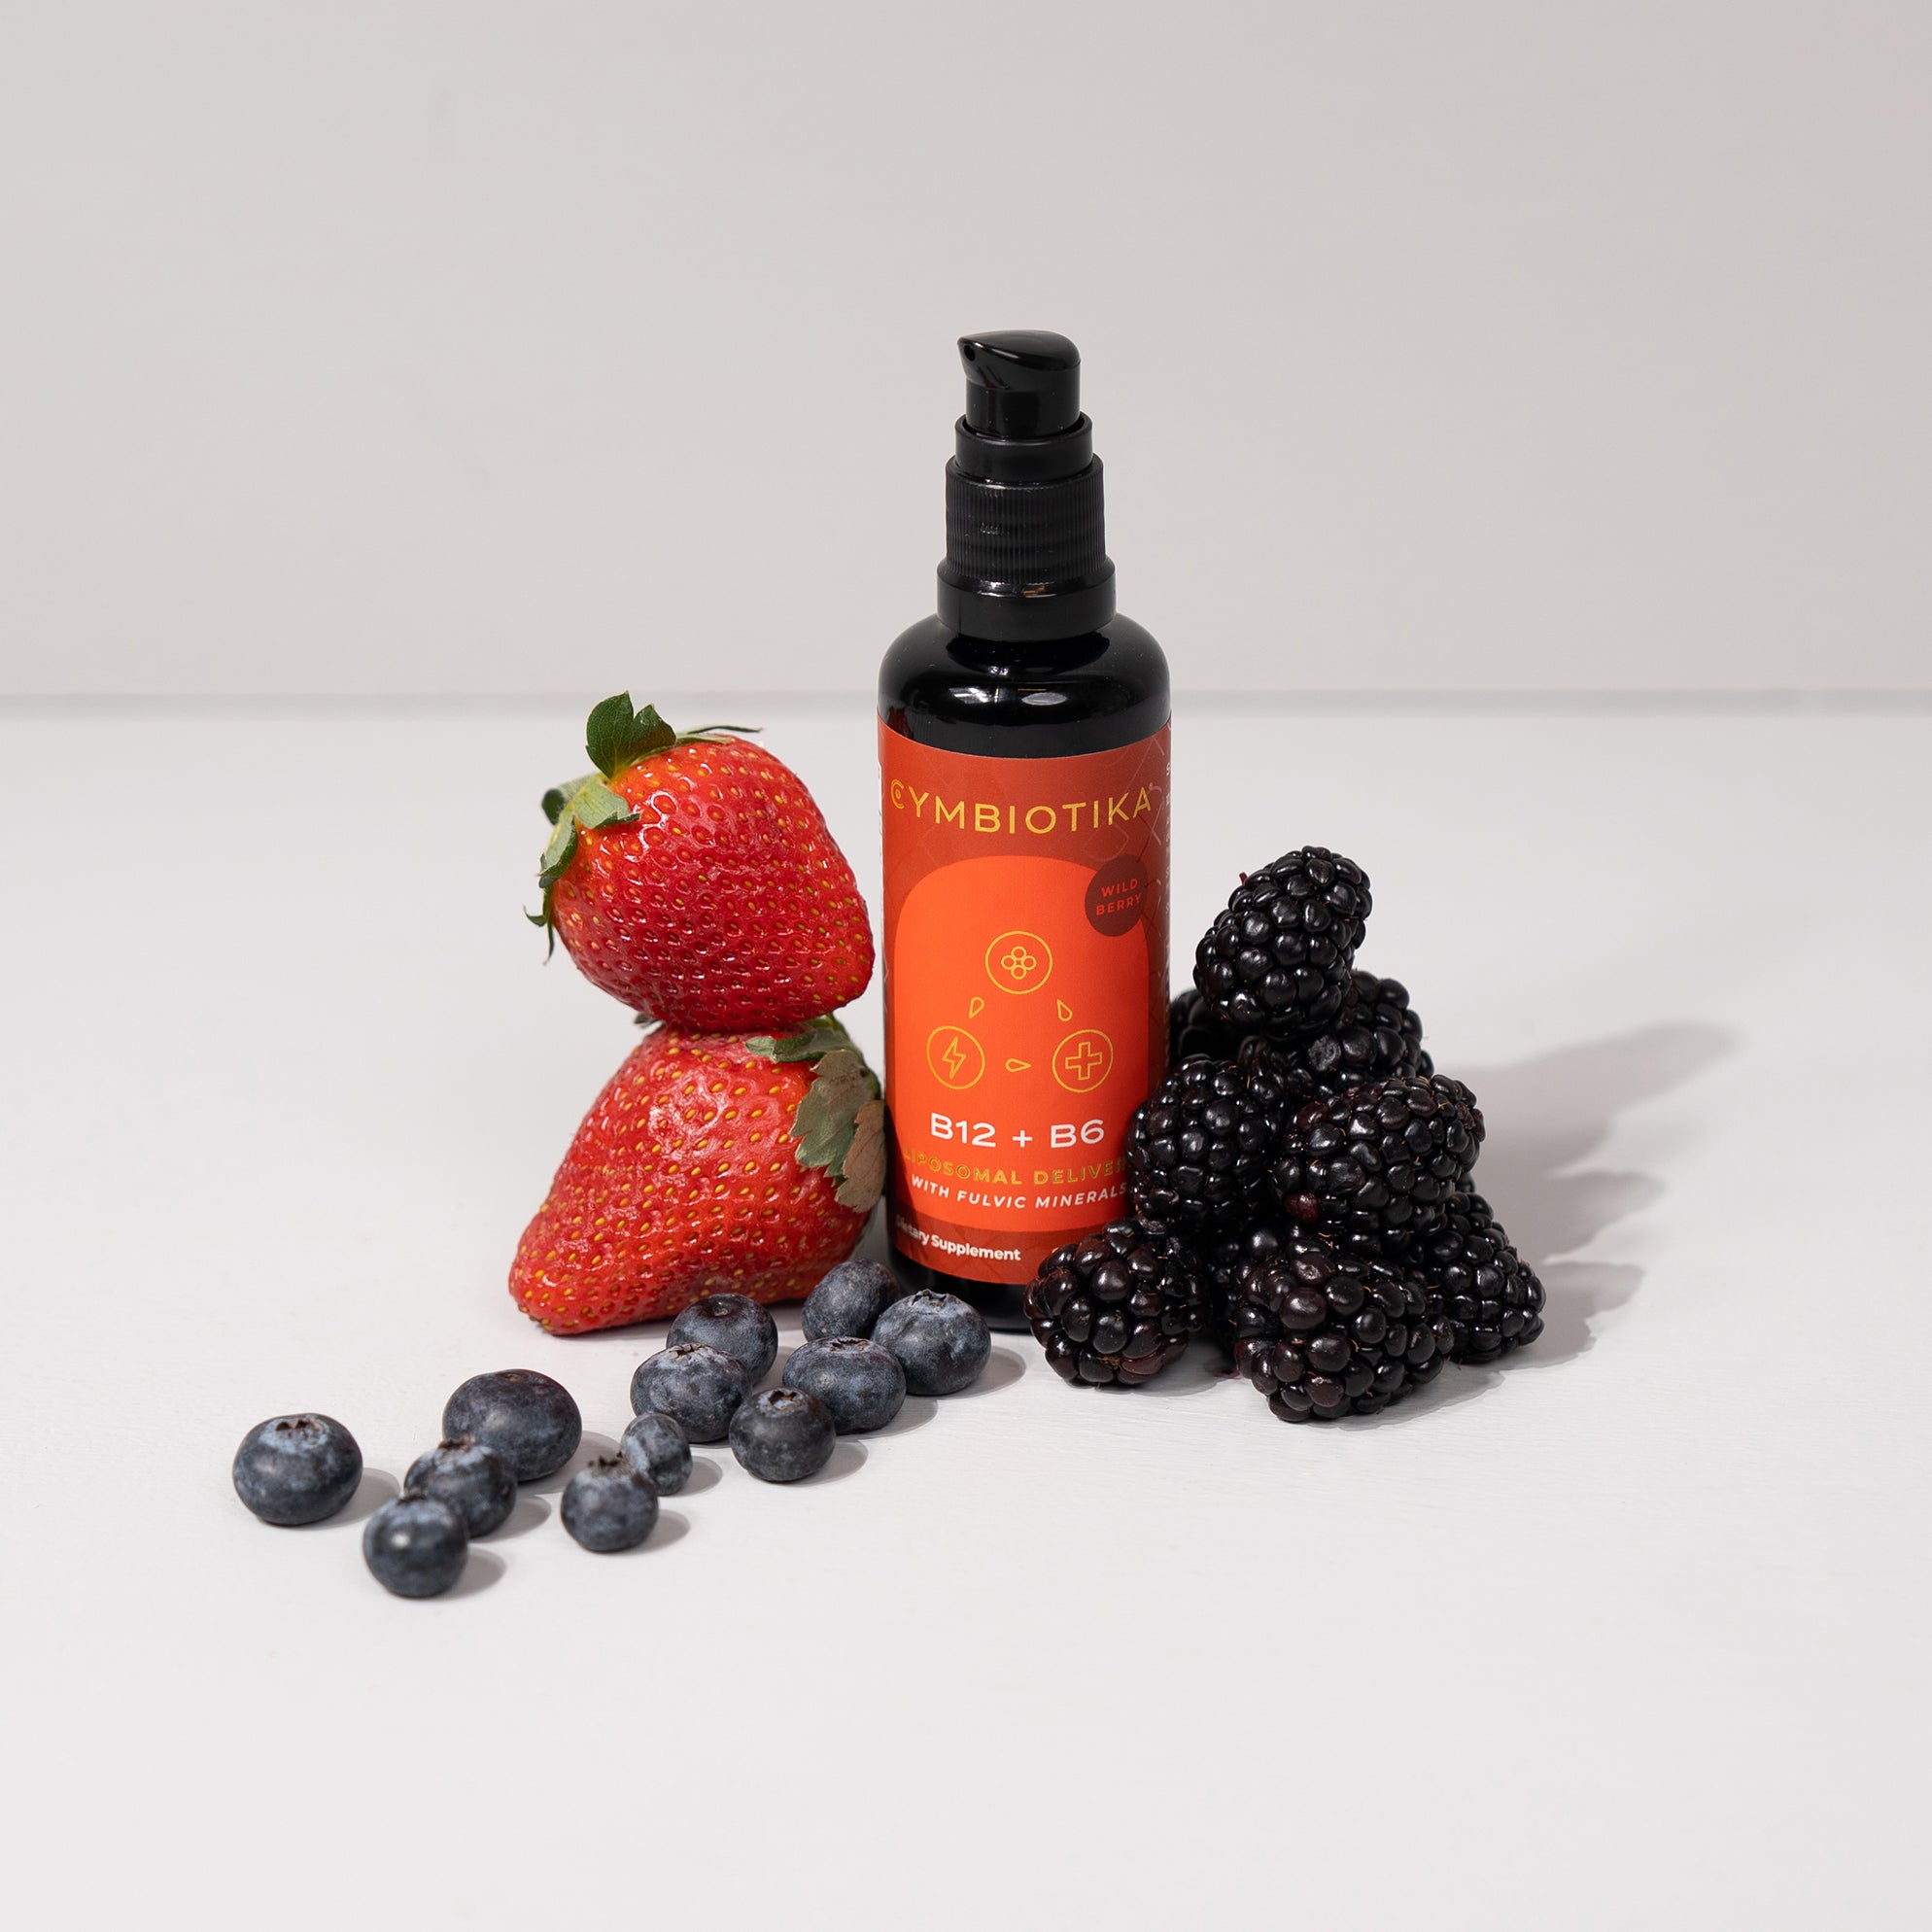 Liposomal Vitamin B12 + B6 With Strawberries, Blueberries and Raspberries 